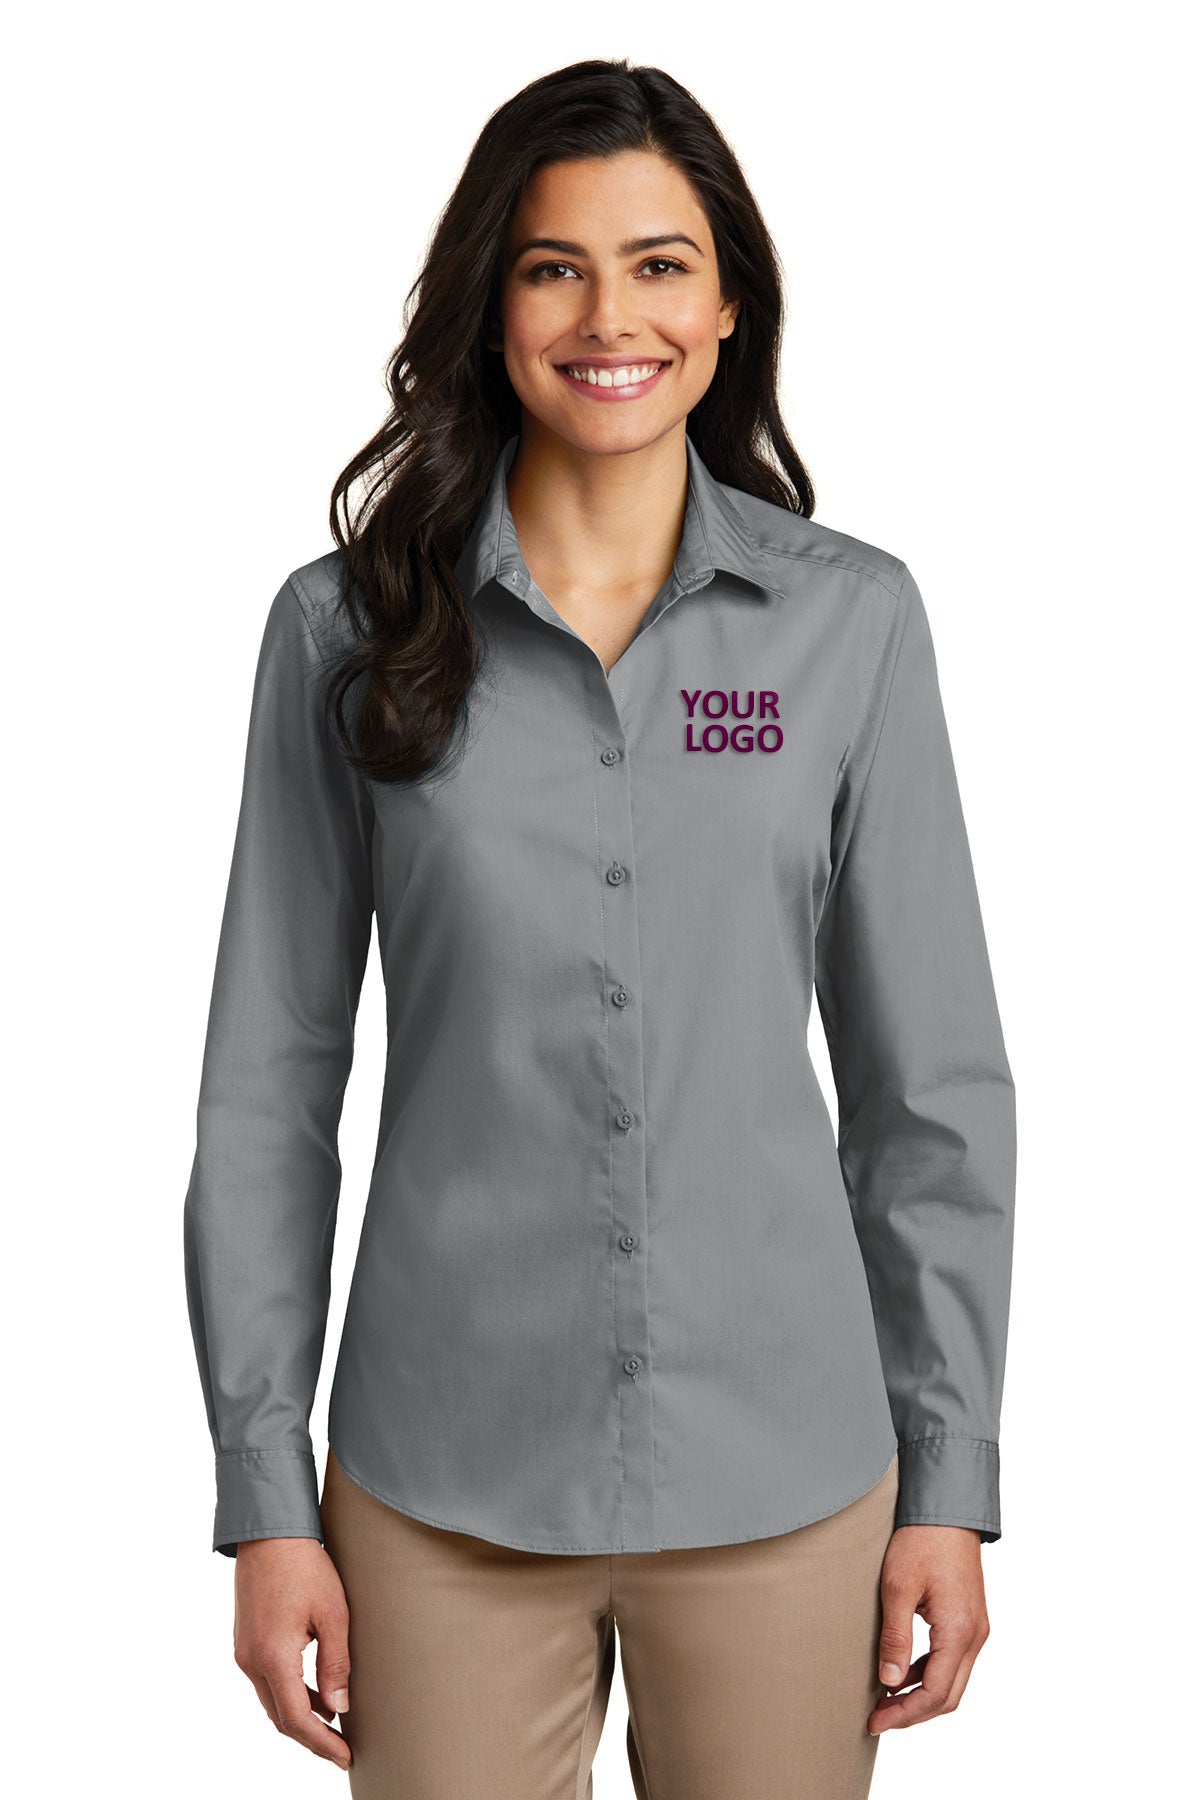 Port Authority Gusty Grey LW100 company logo shirts